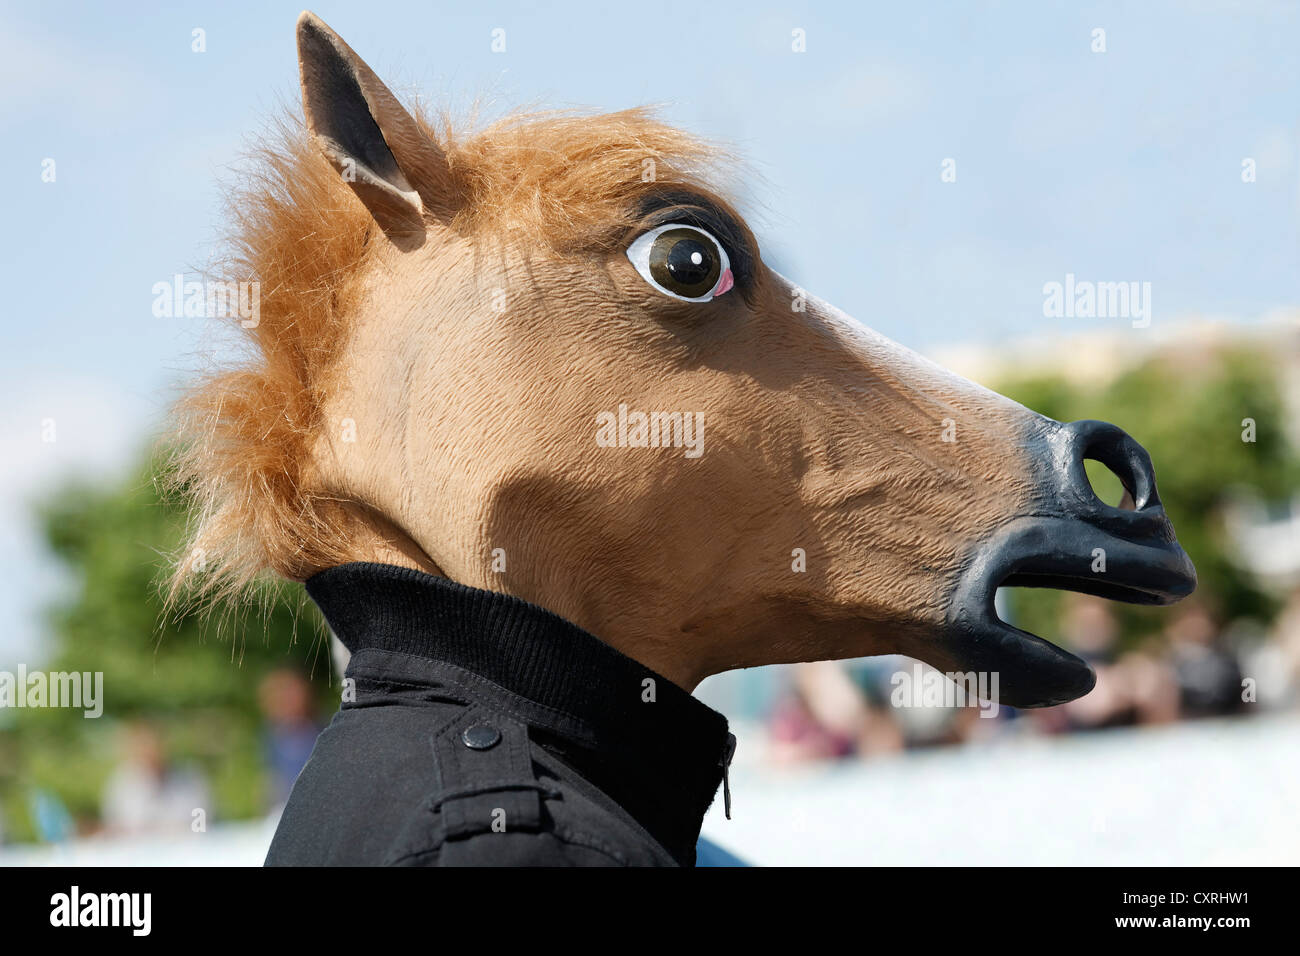 Disfraz de caballo fotografías e imágenes de alta resolución - Página 4 -  Alamy